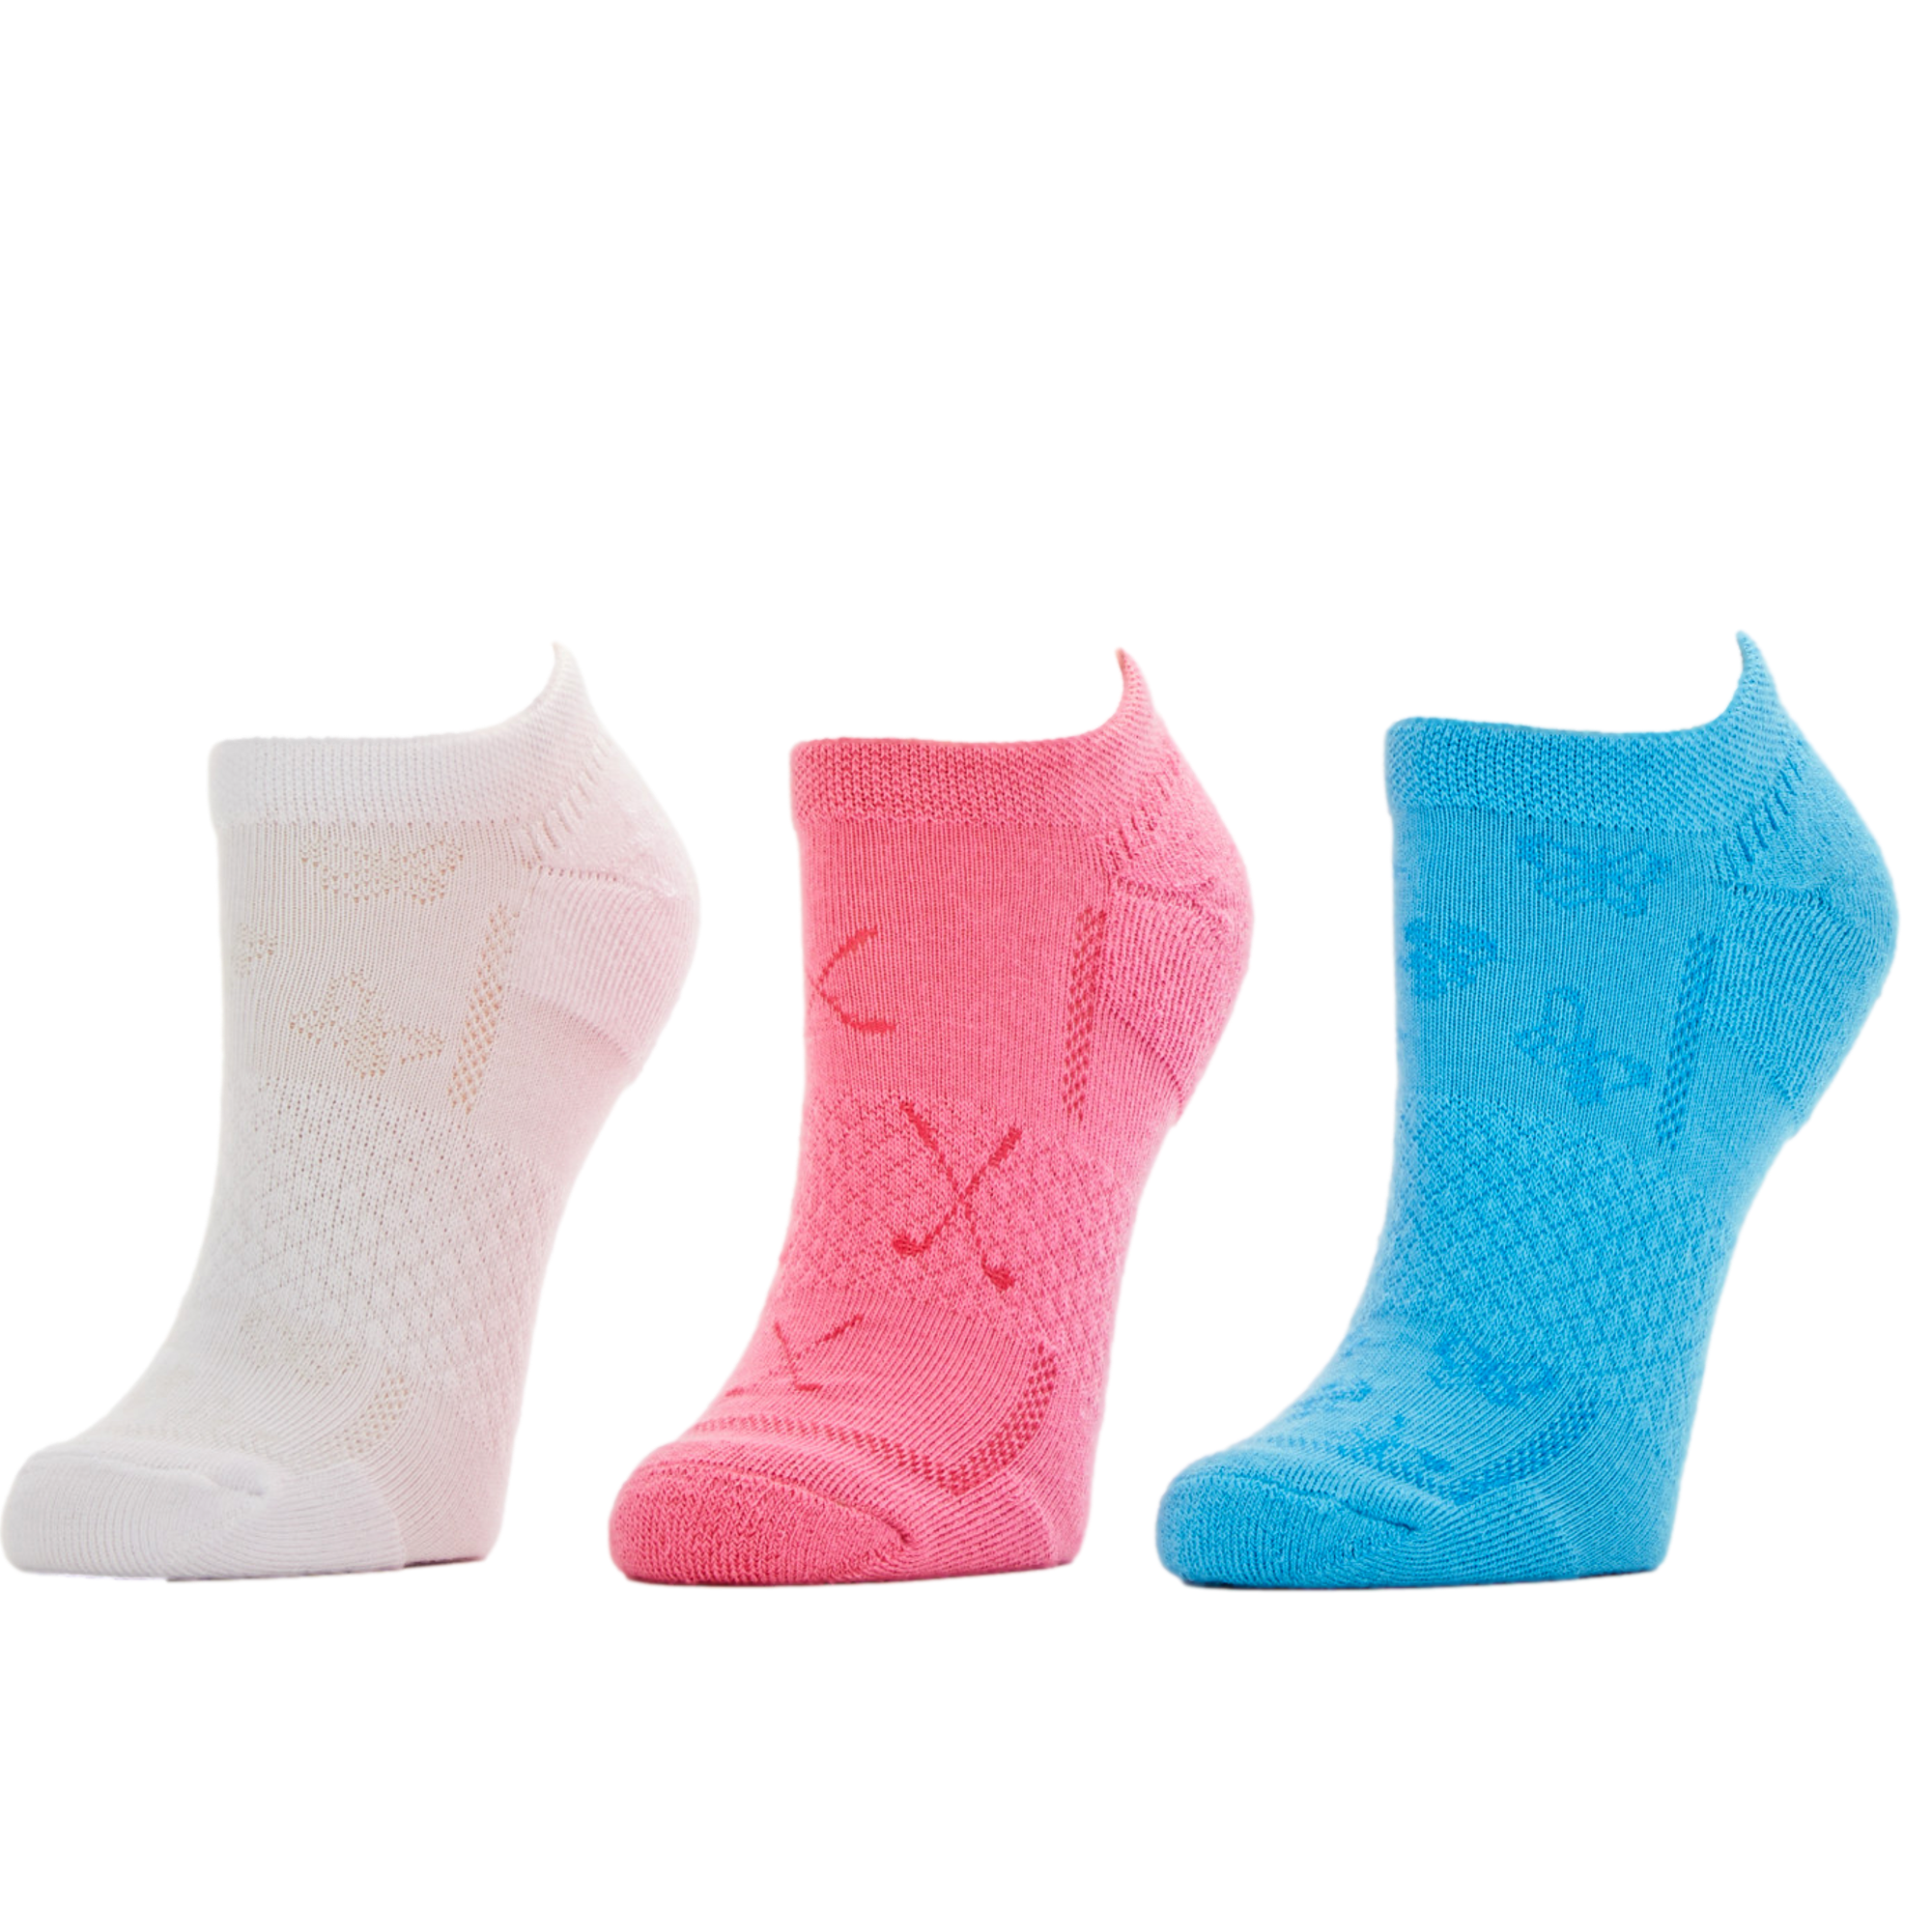 Ladies Textured Print Low Cut Golf Socks, 3-Pack